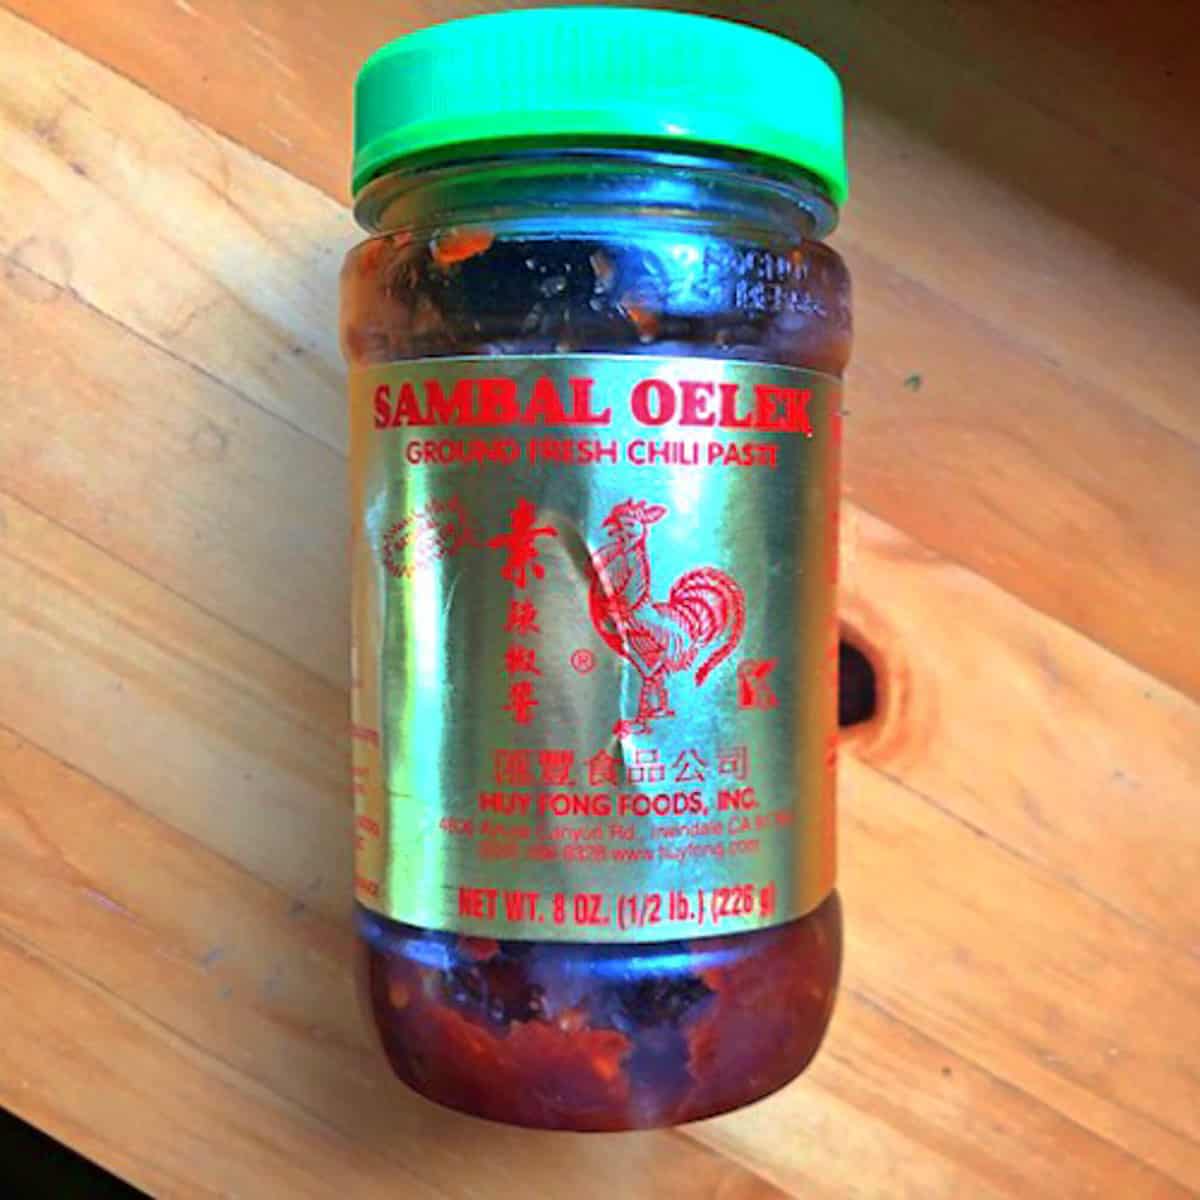 Sambal Oelek chili paste small bottle on a wood background.